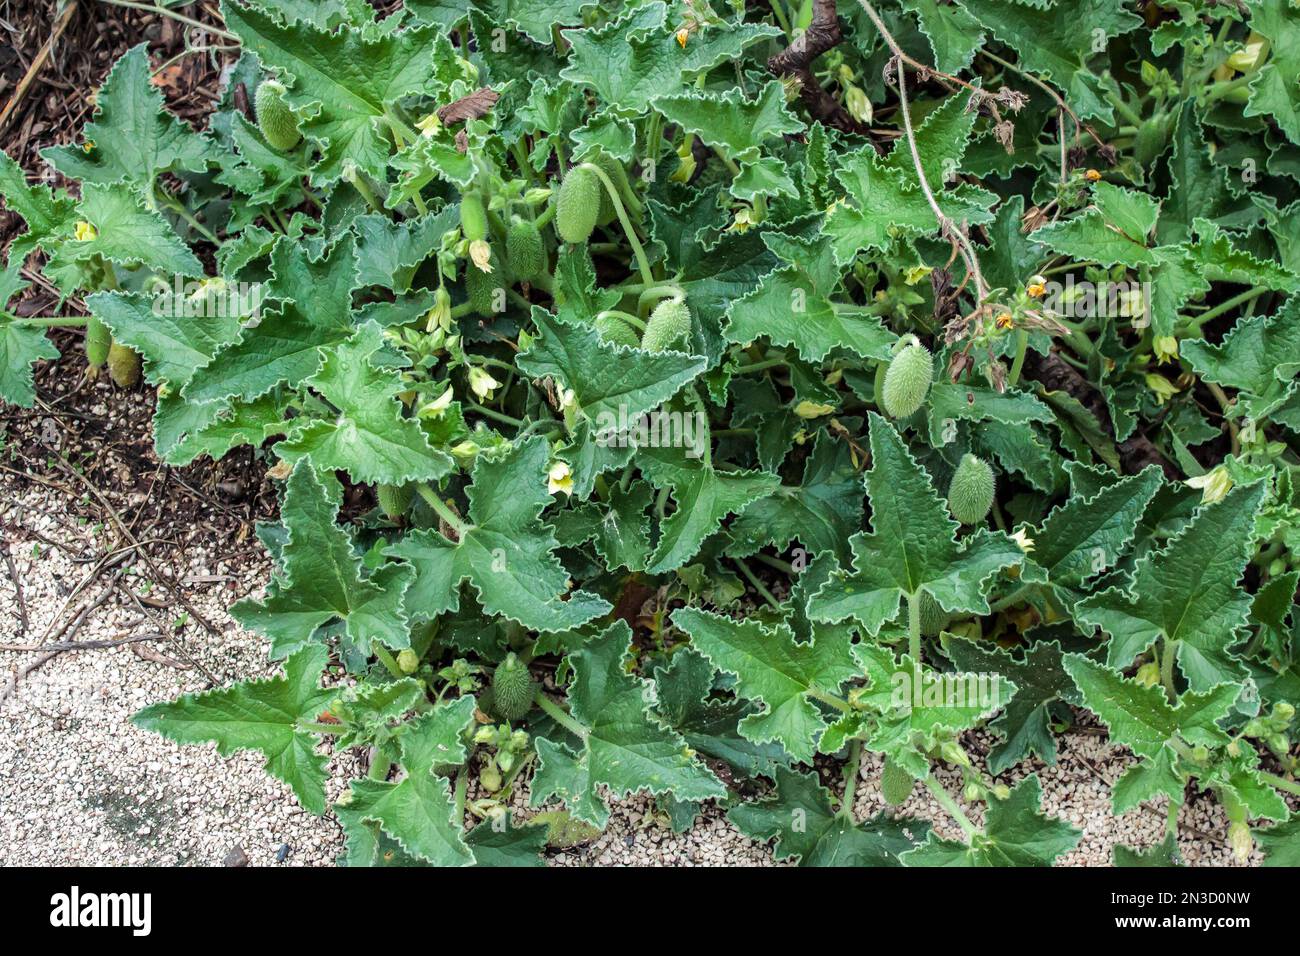 Exploding cucumbers, selective focus. Leaves and fruits of Ecballium elaterium plant exploding when ripe Stock Photo